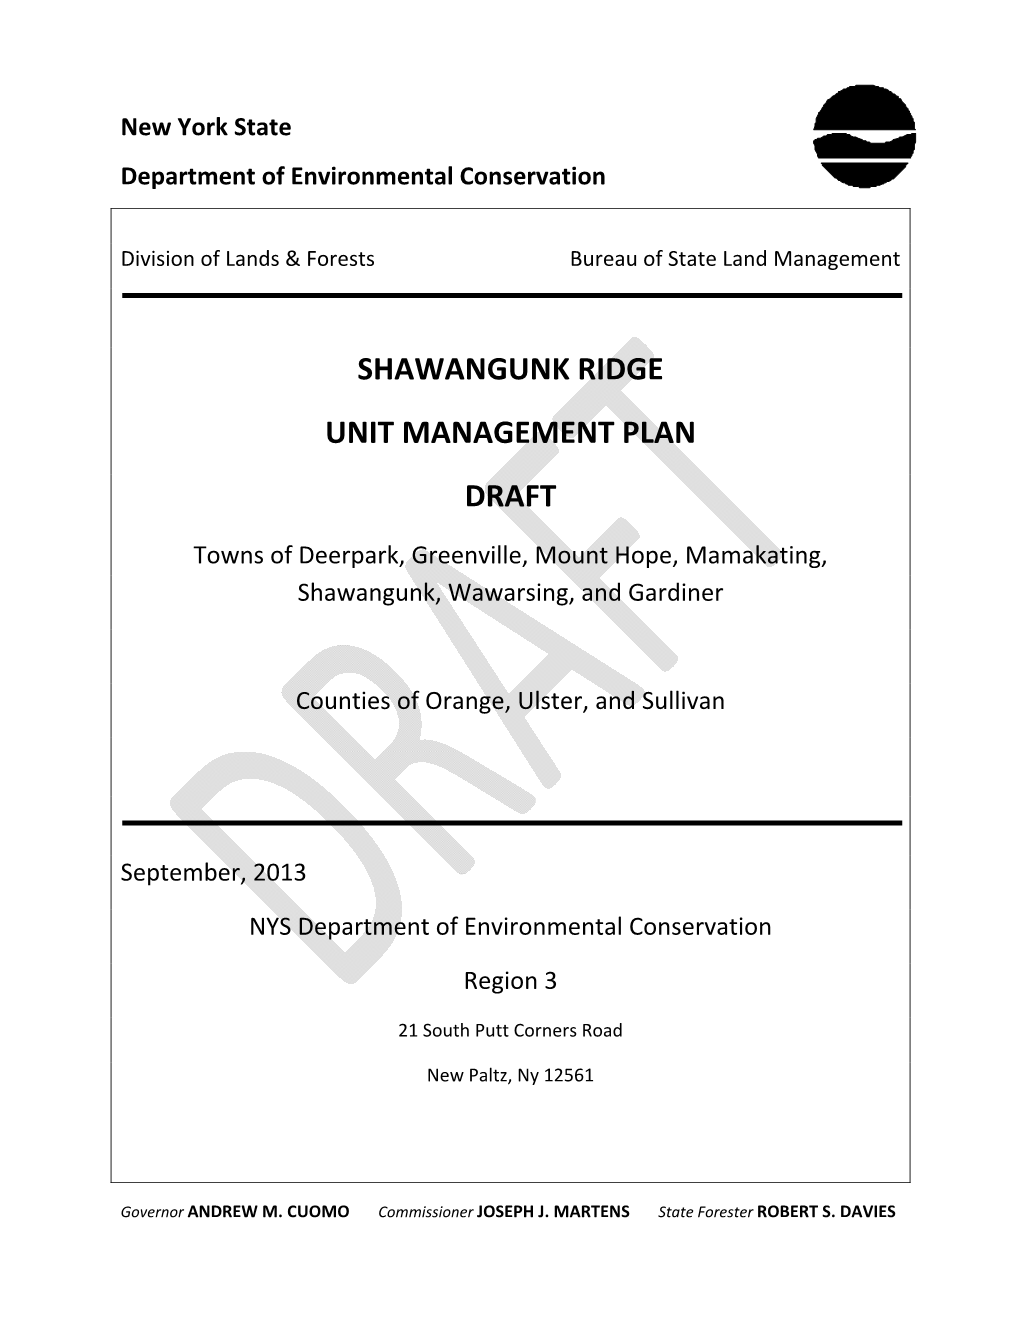 Shawangunk Ridge Draft Unit Management Plan